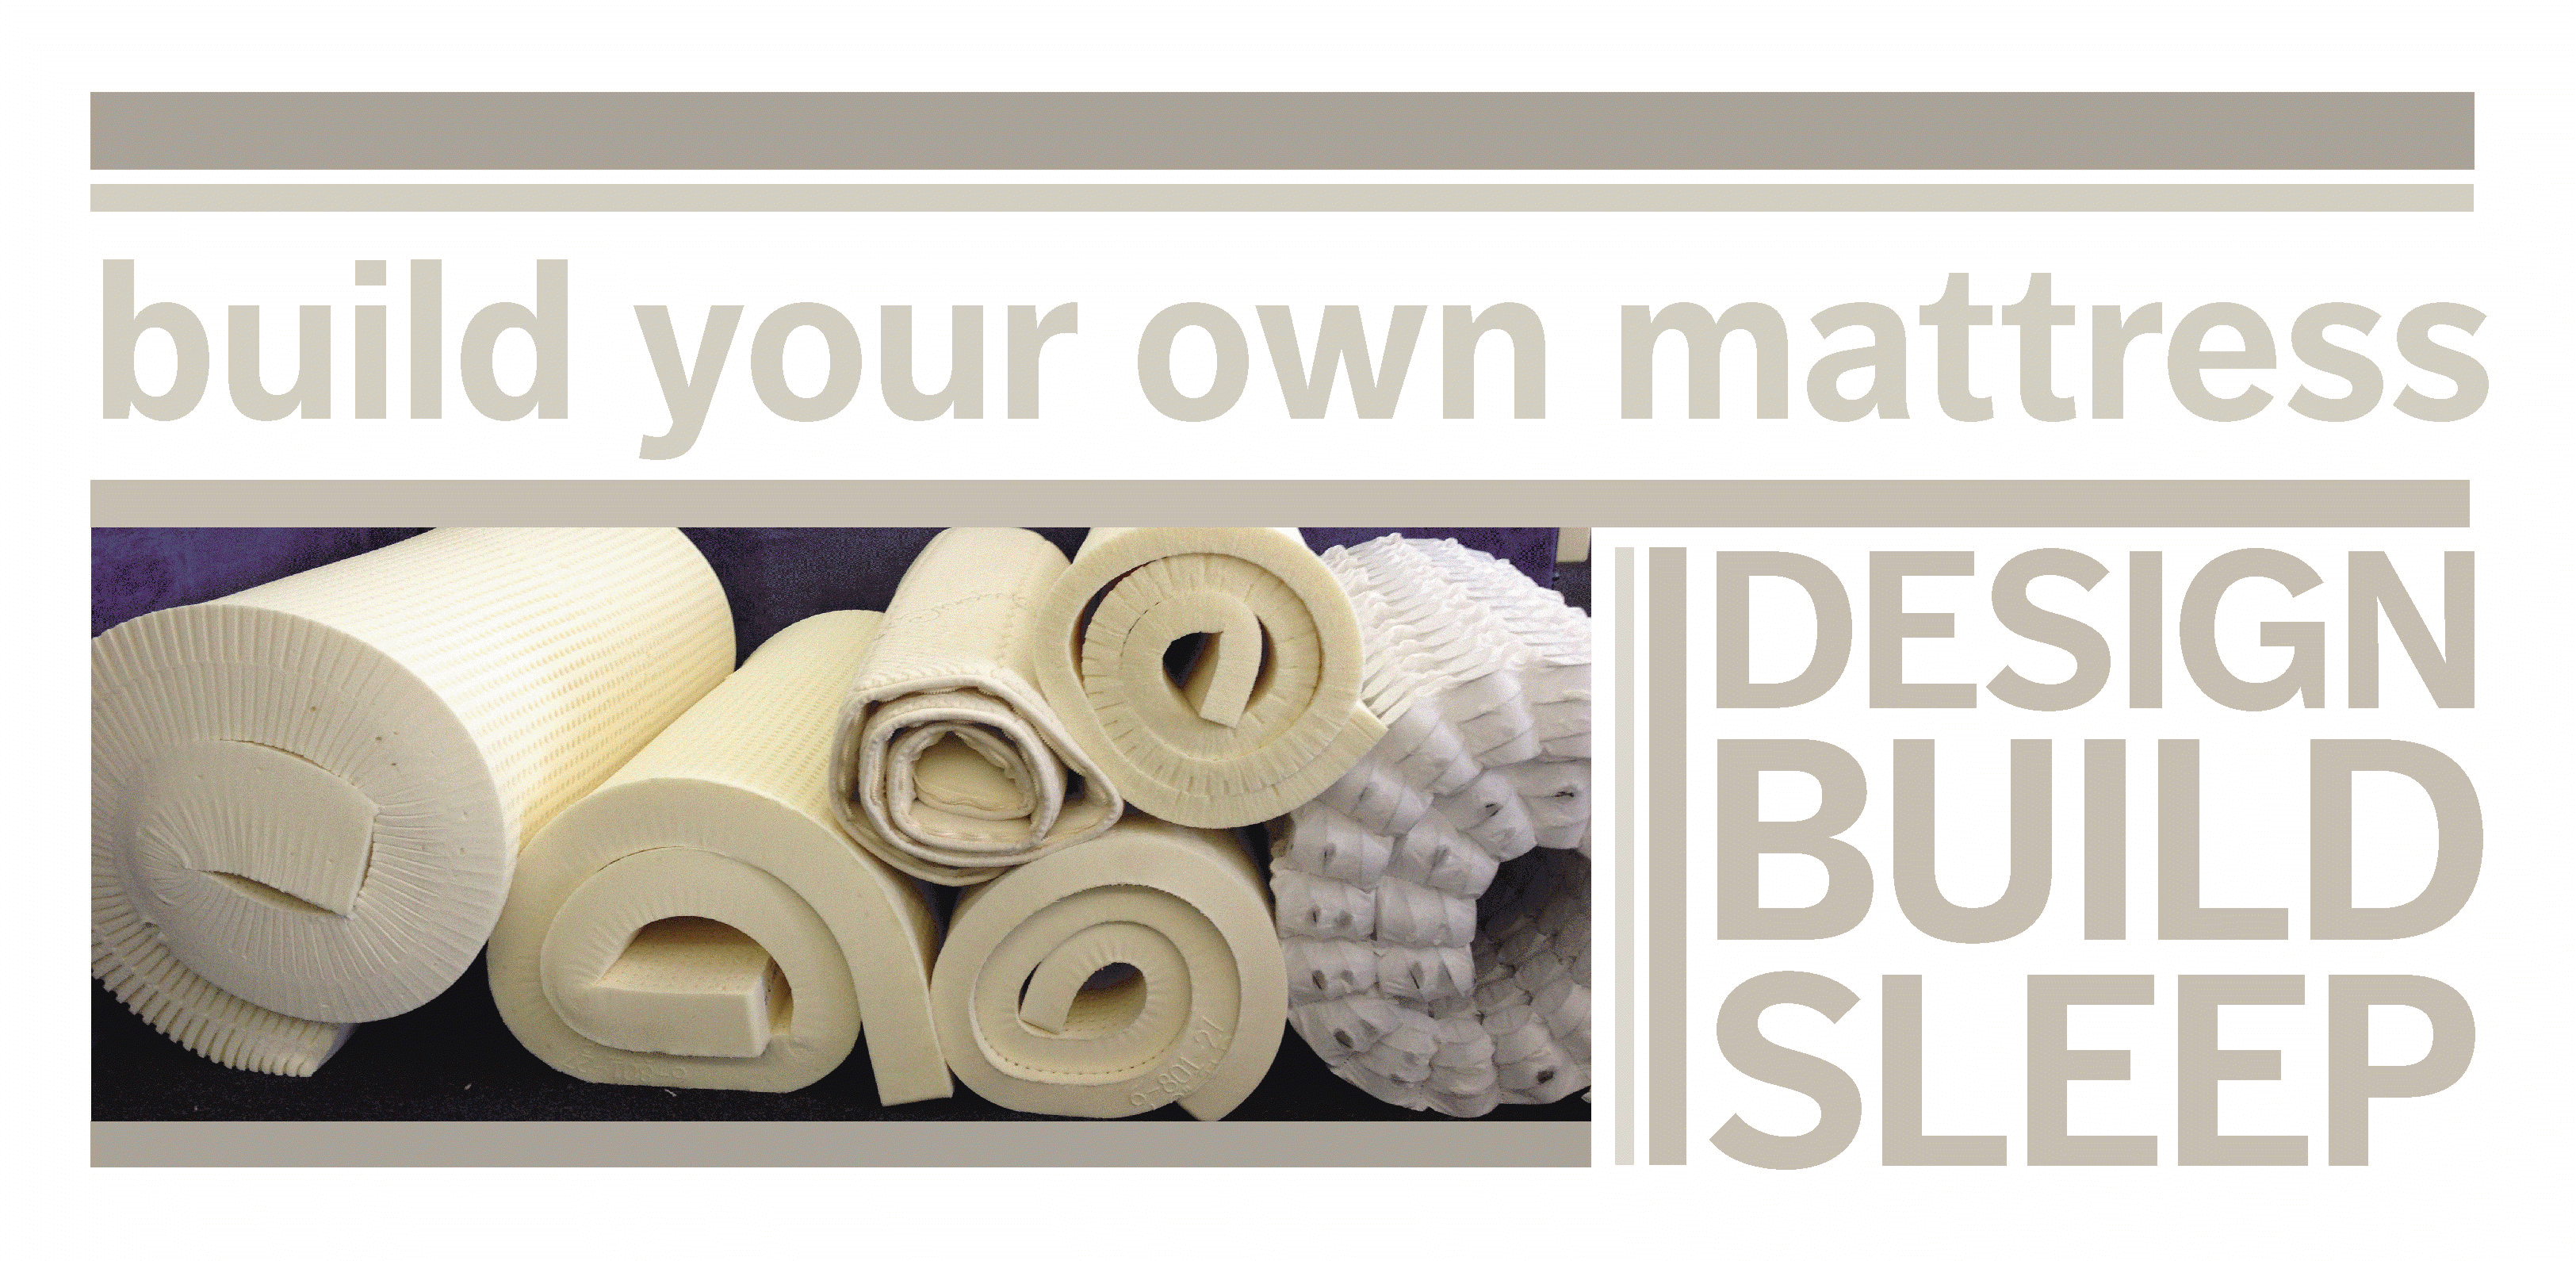 burbank build your own mattress